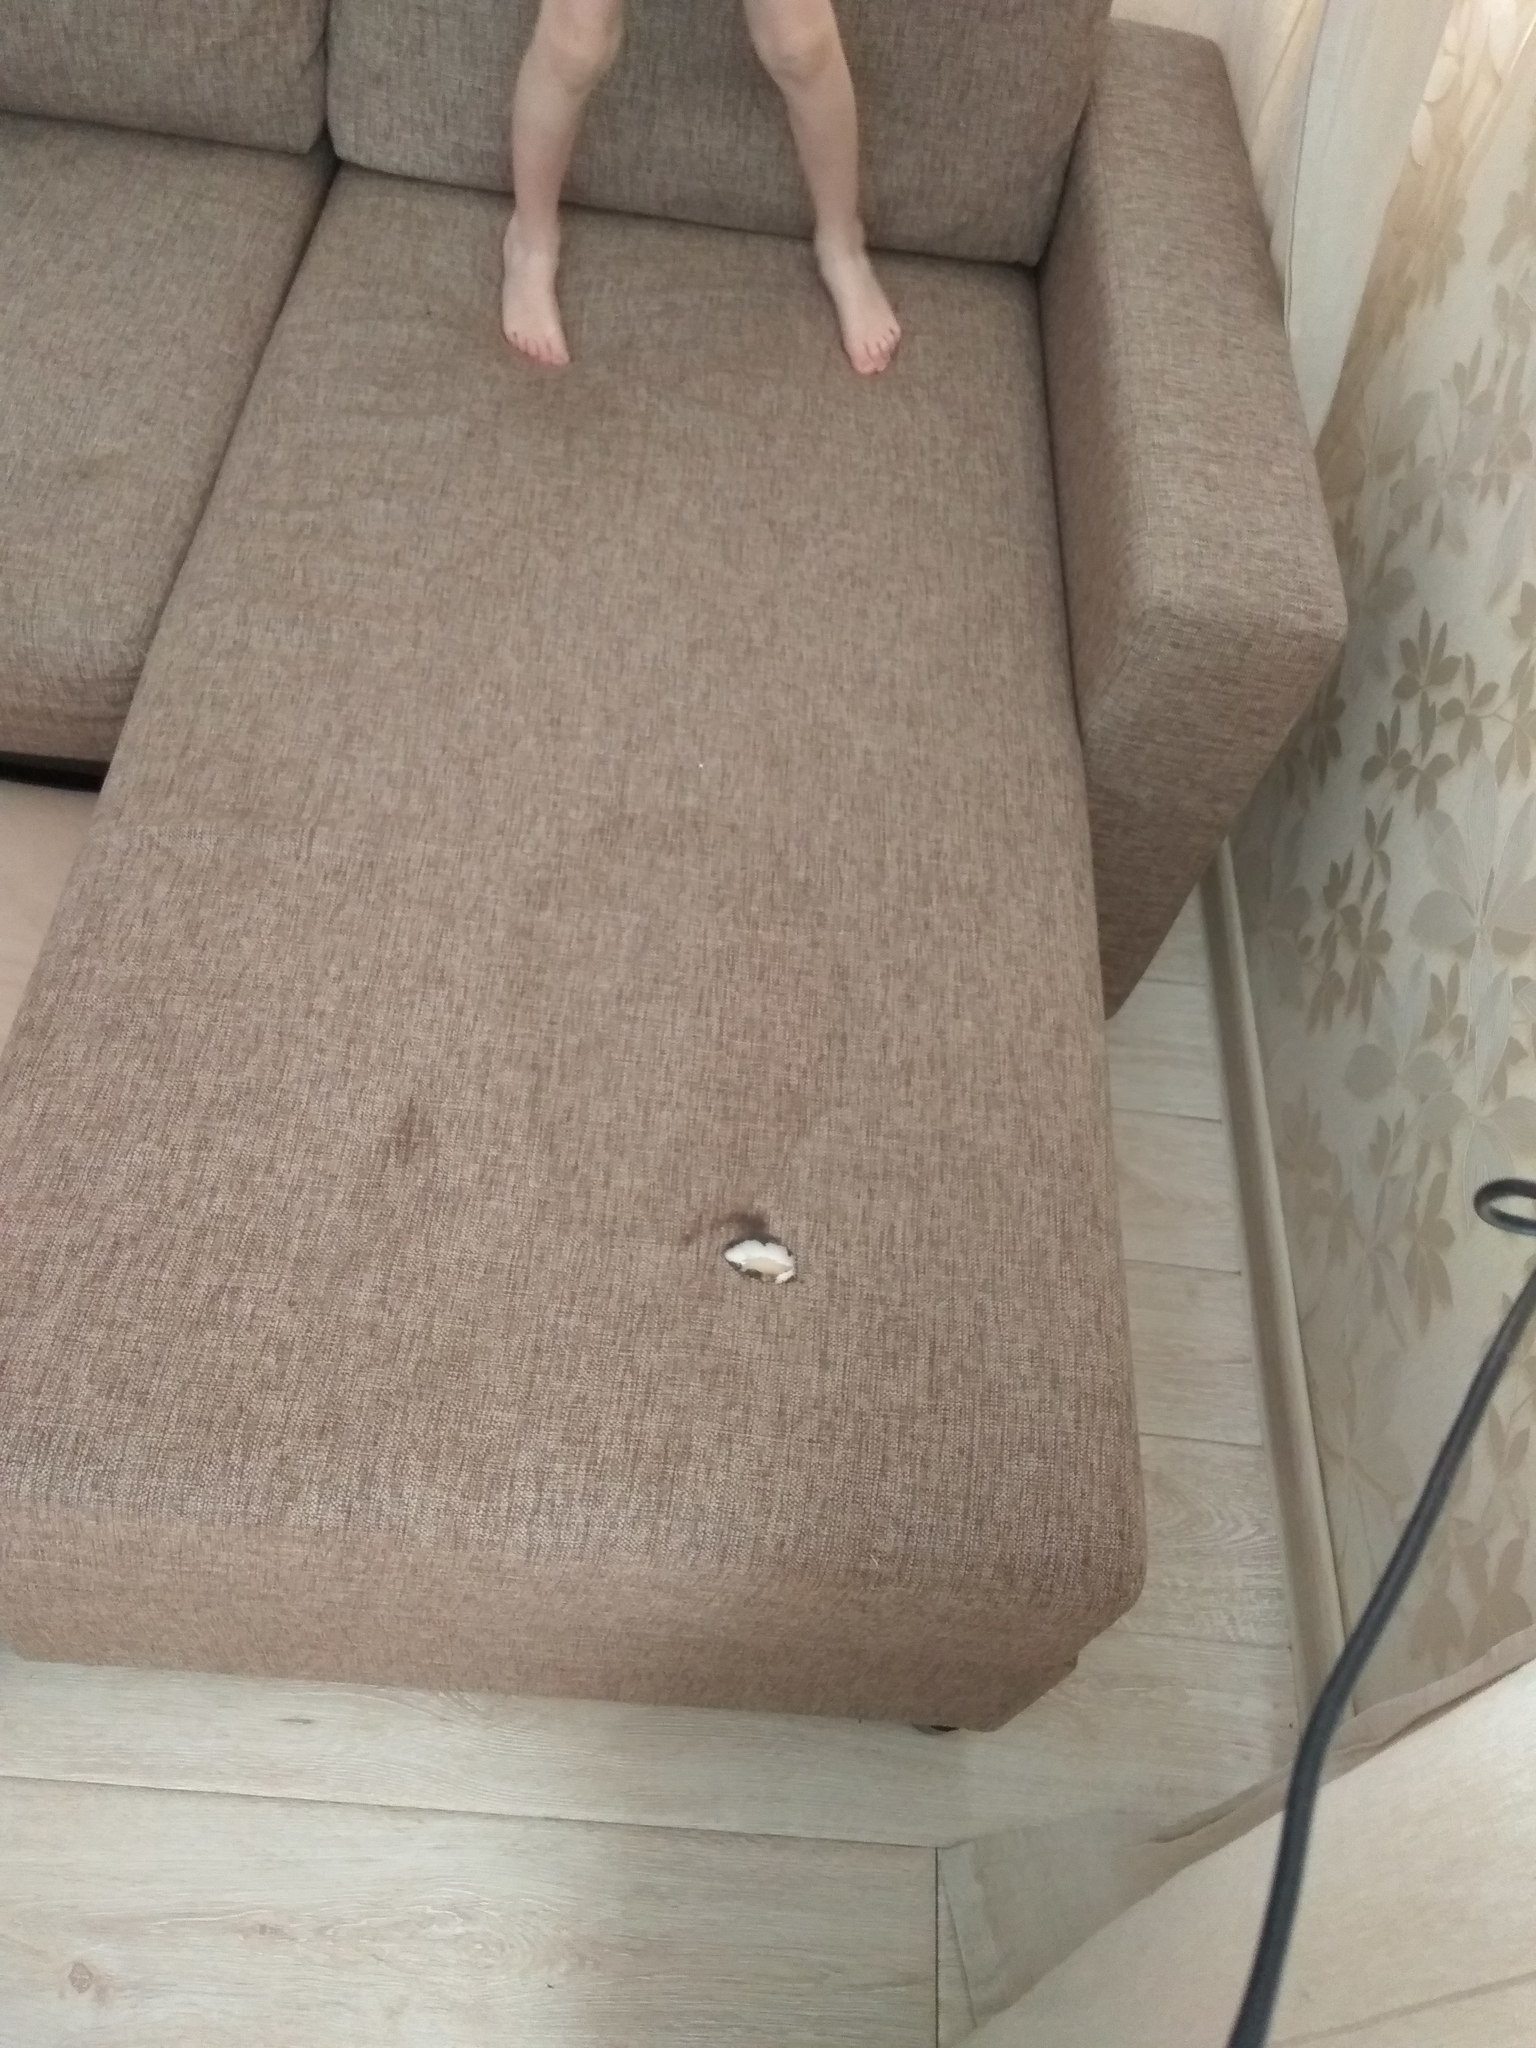 Как убрать дырку на диване?